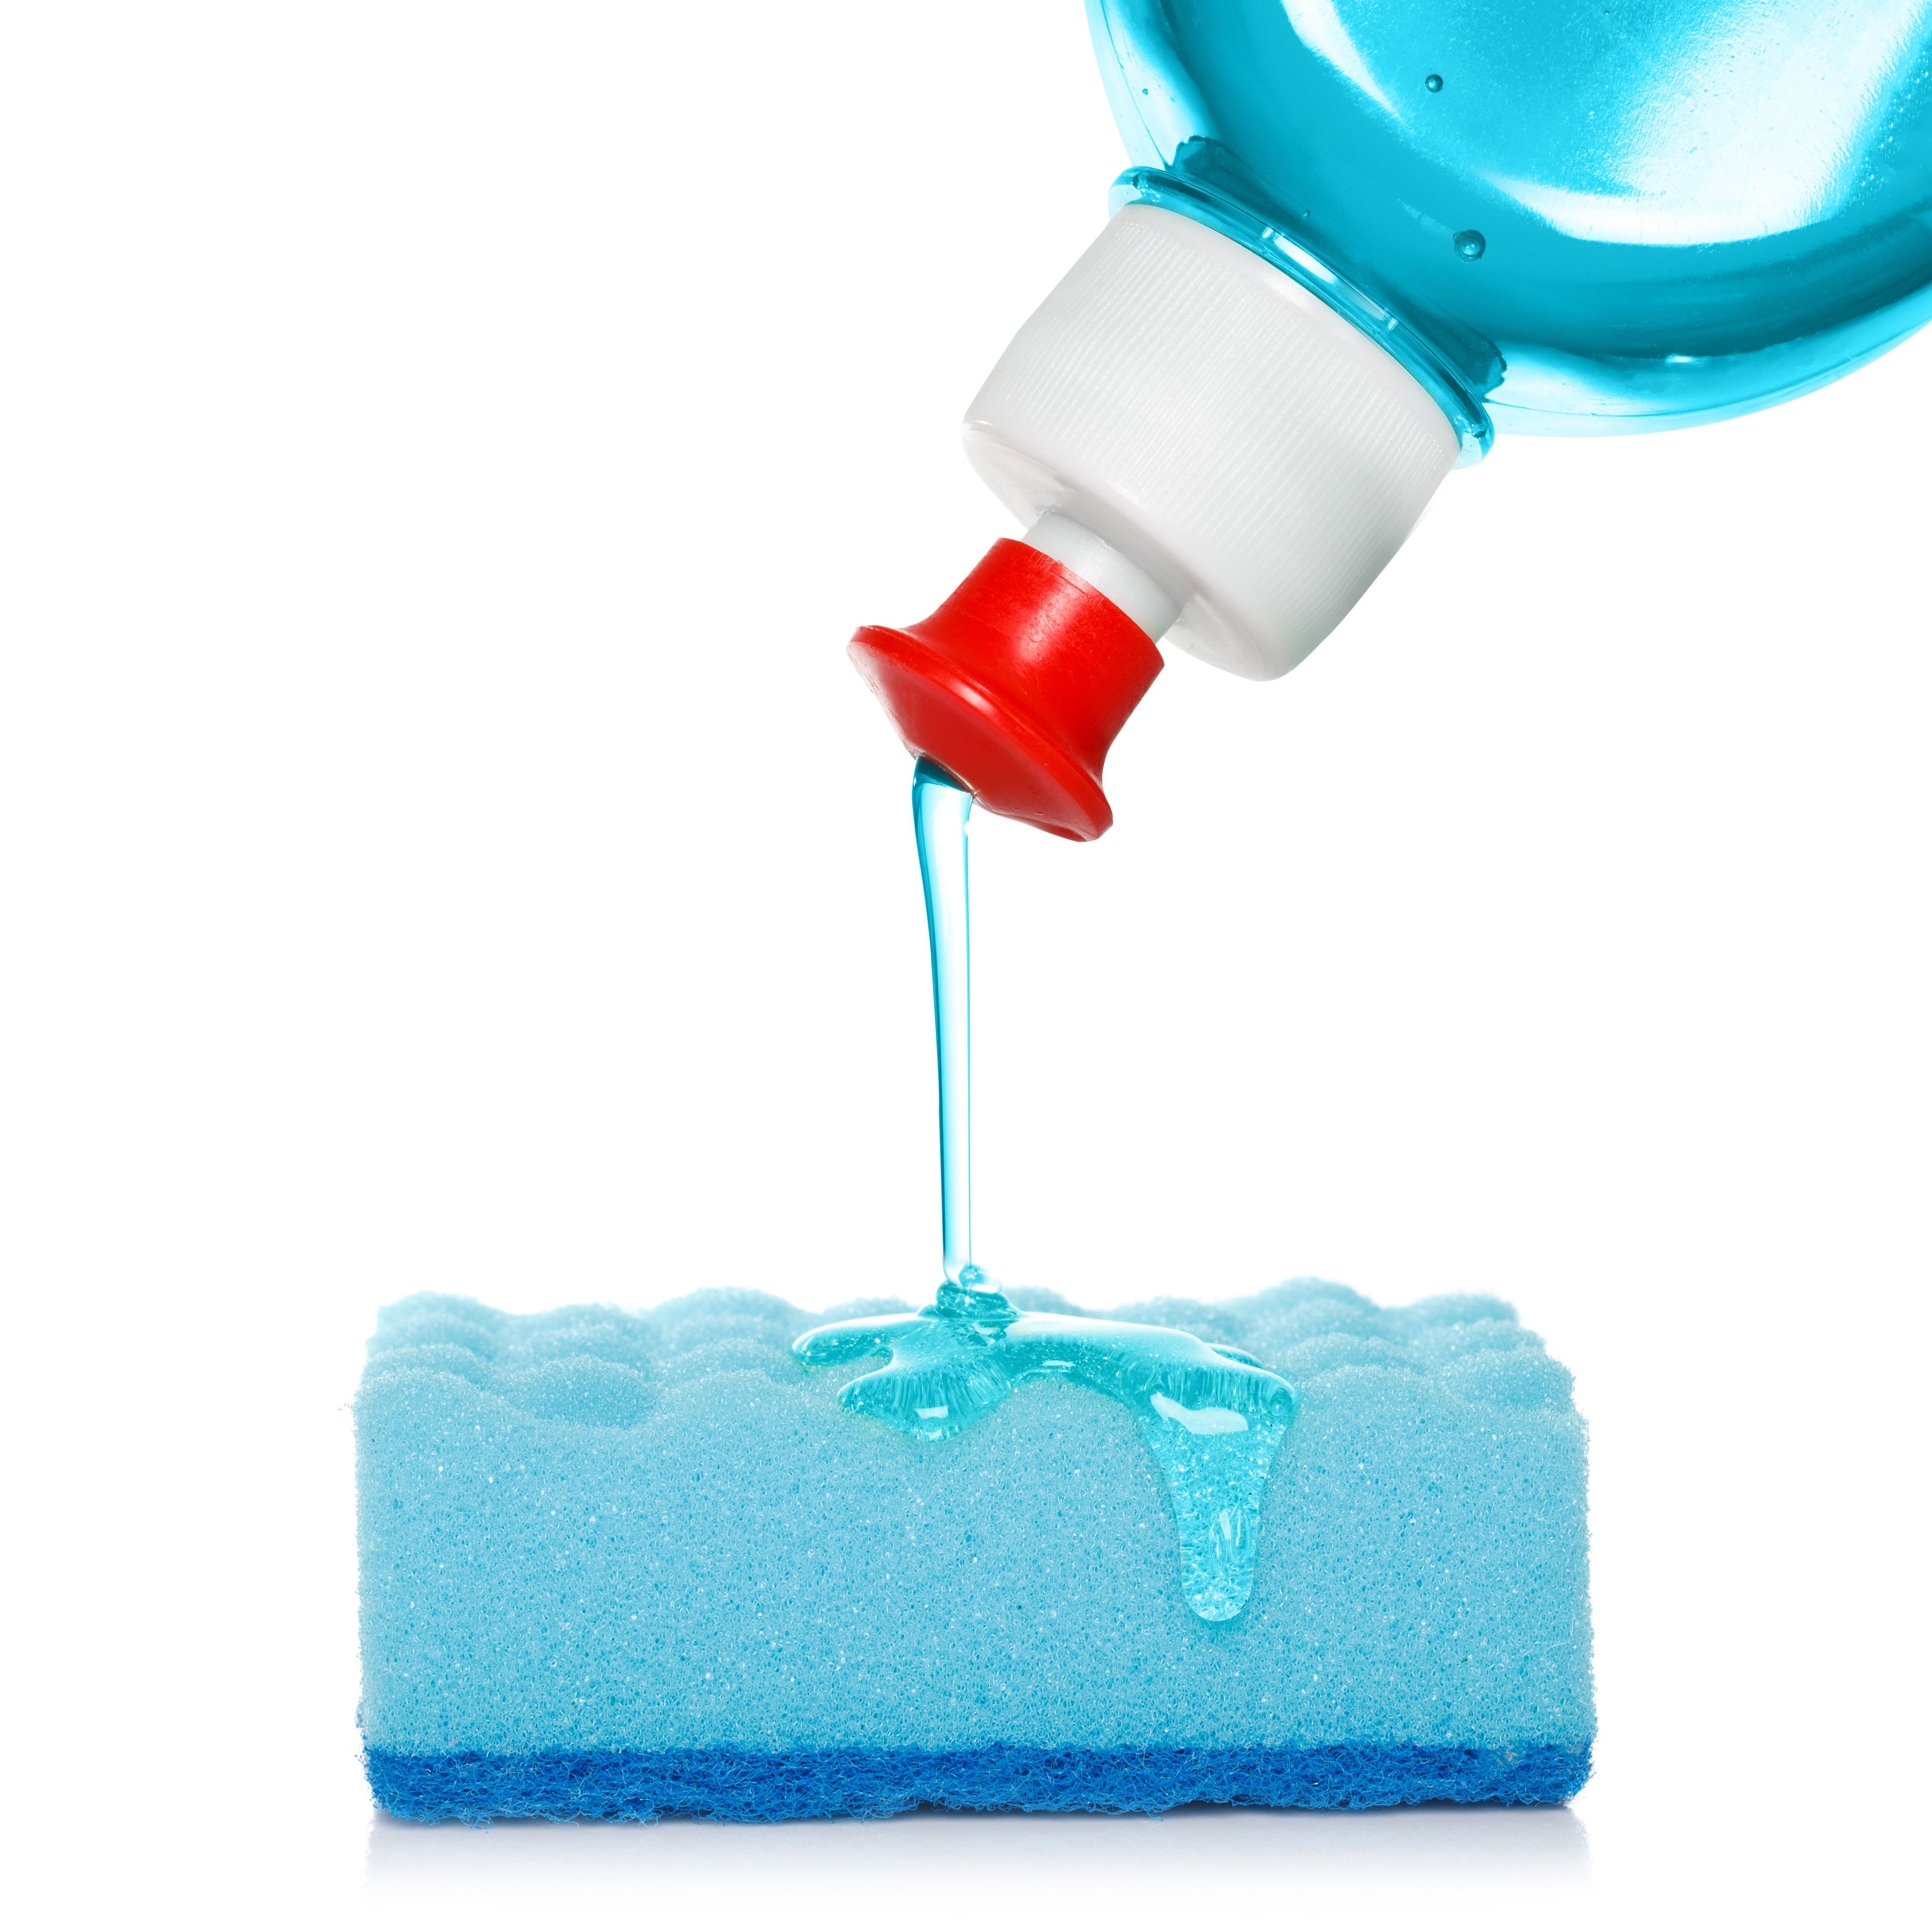 How to make dishwashing liquid